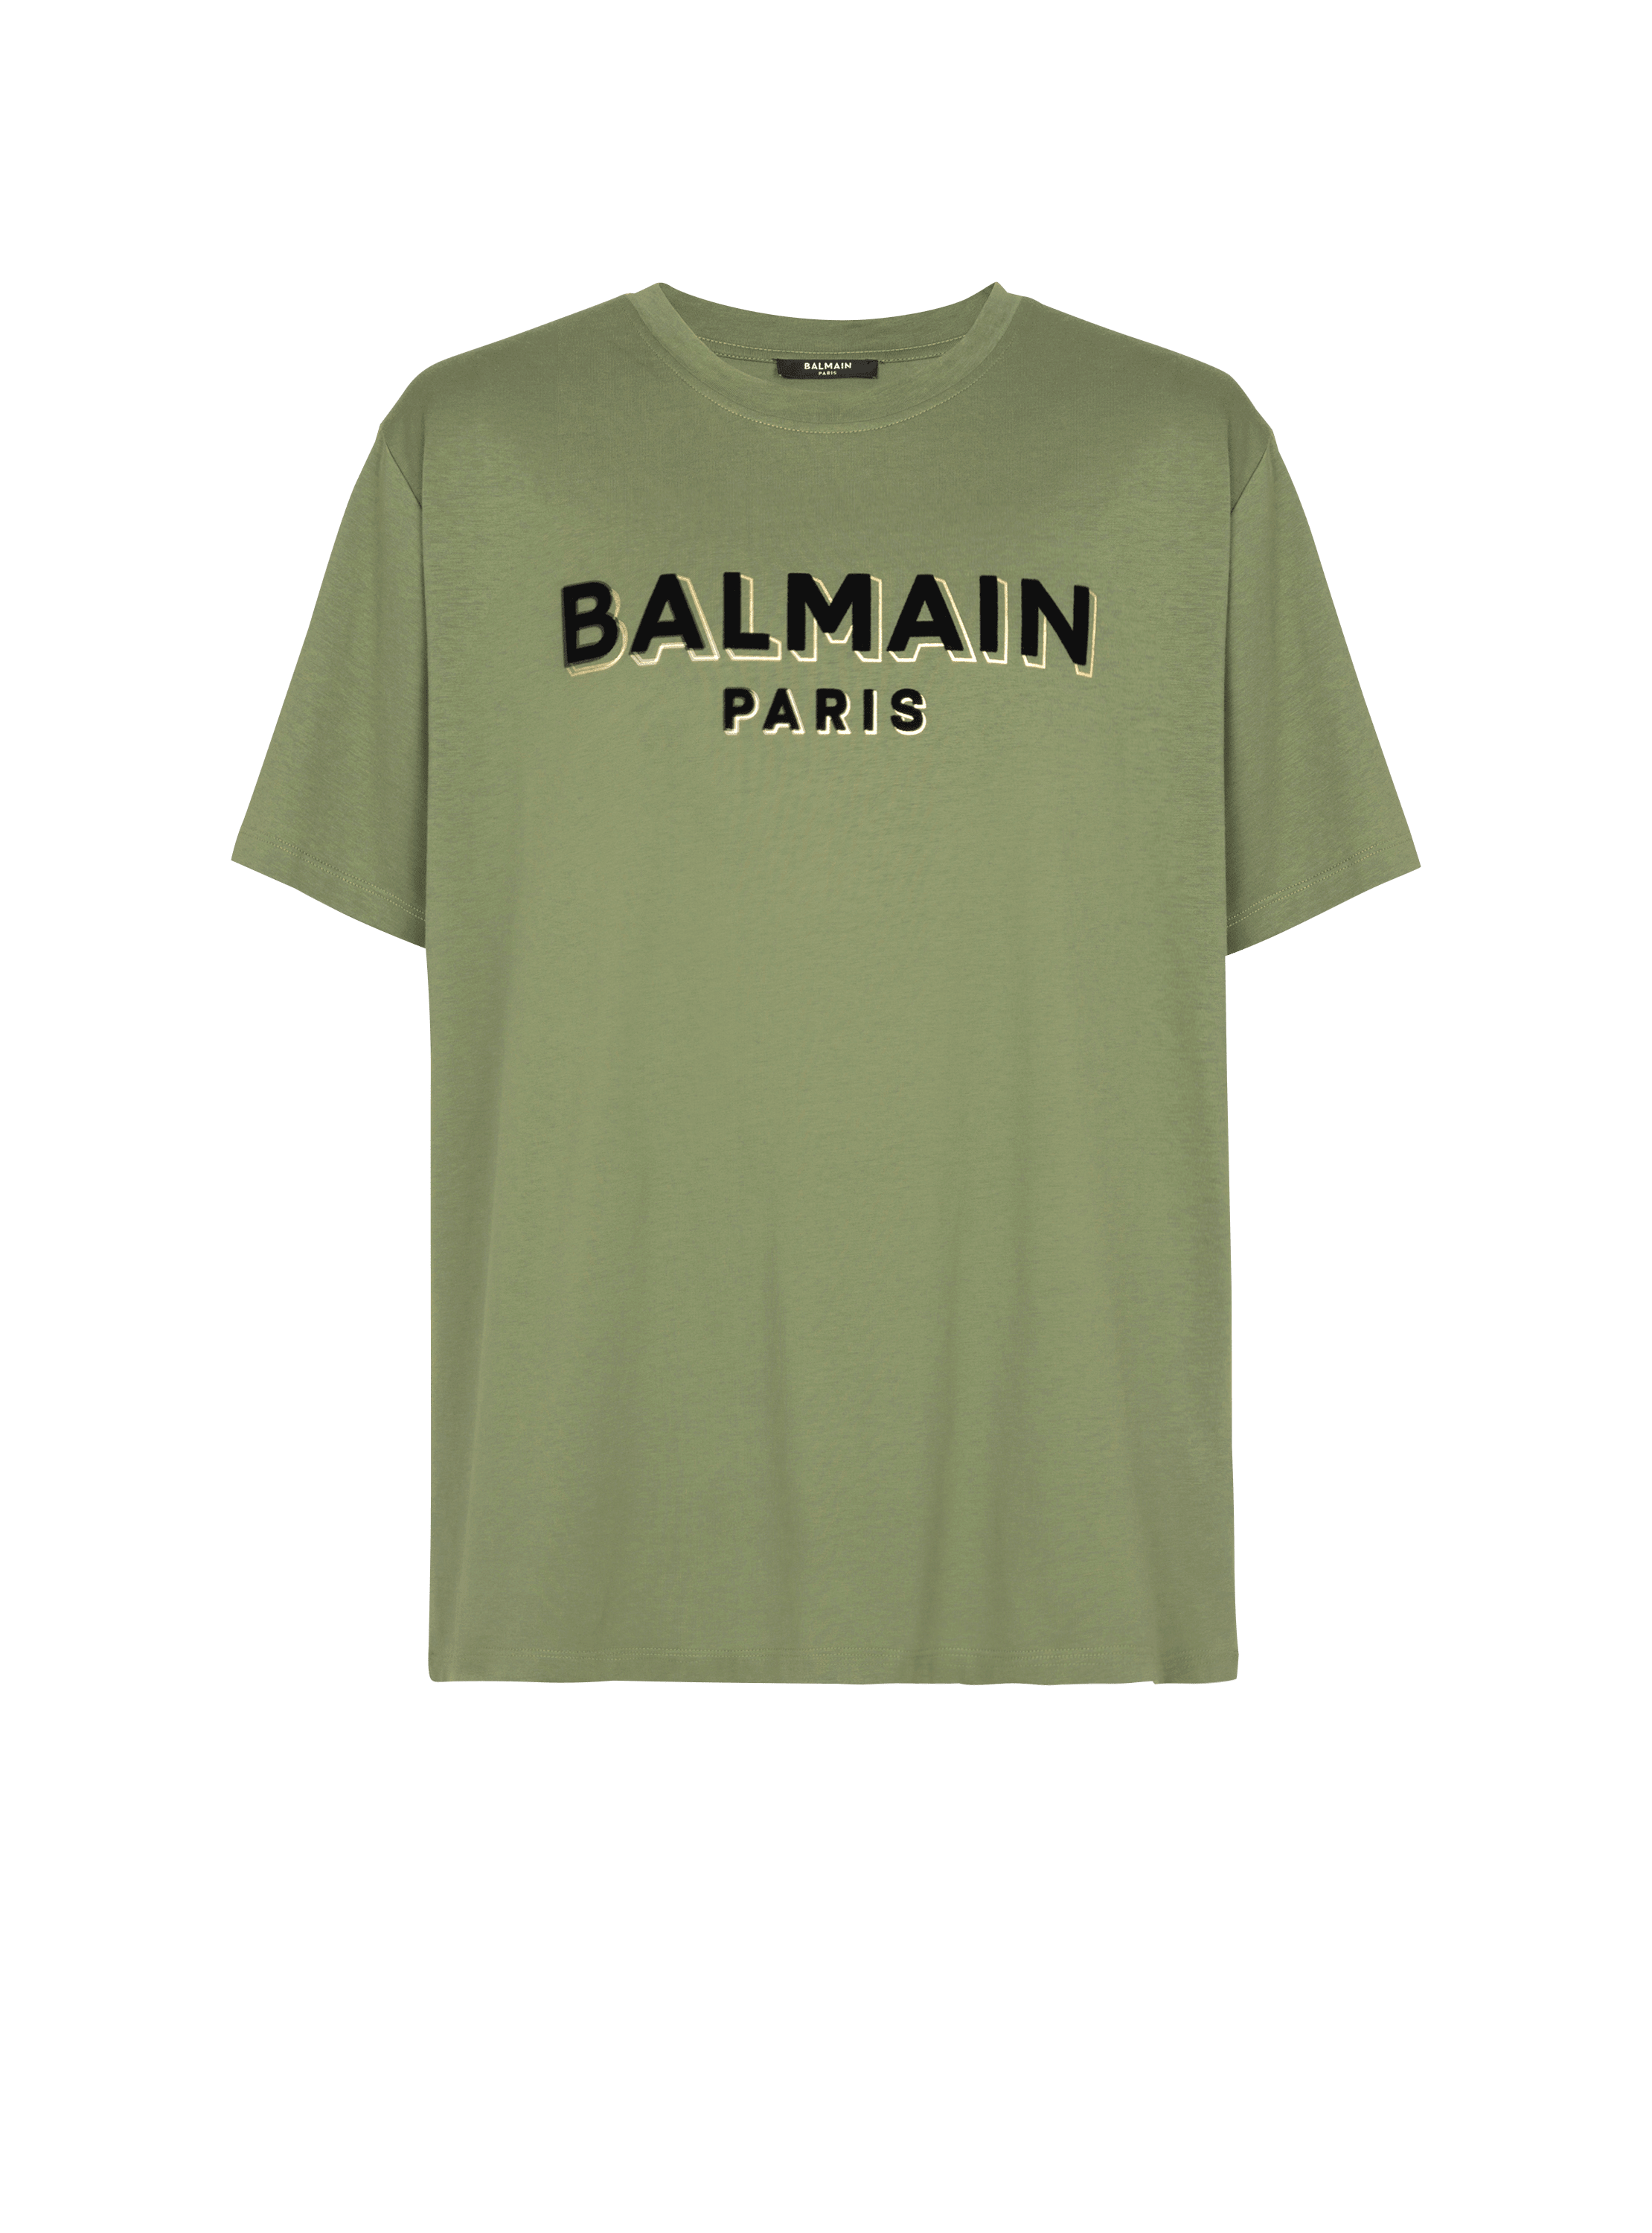 Balmain Paris フロックTシャツ